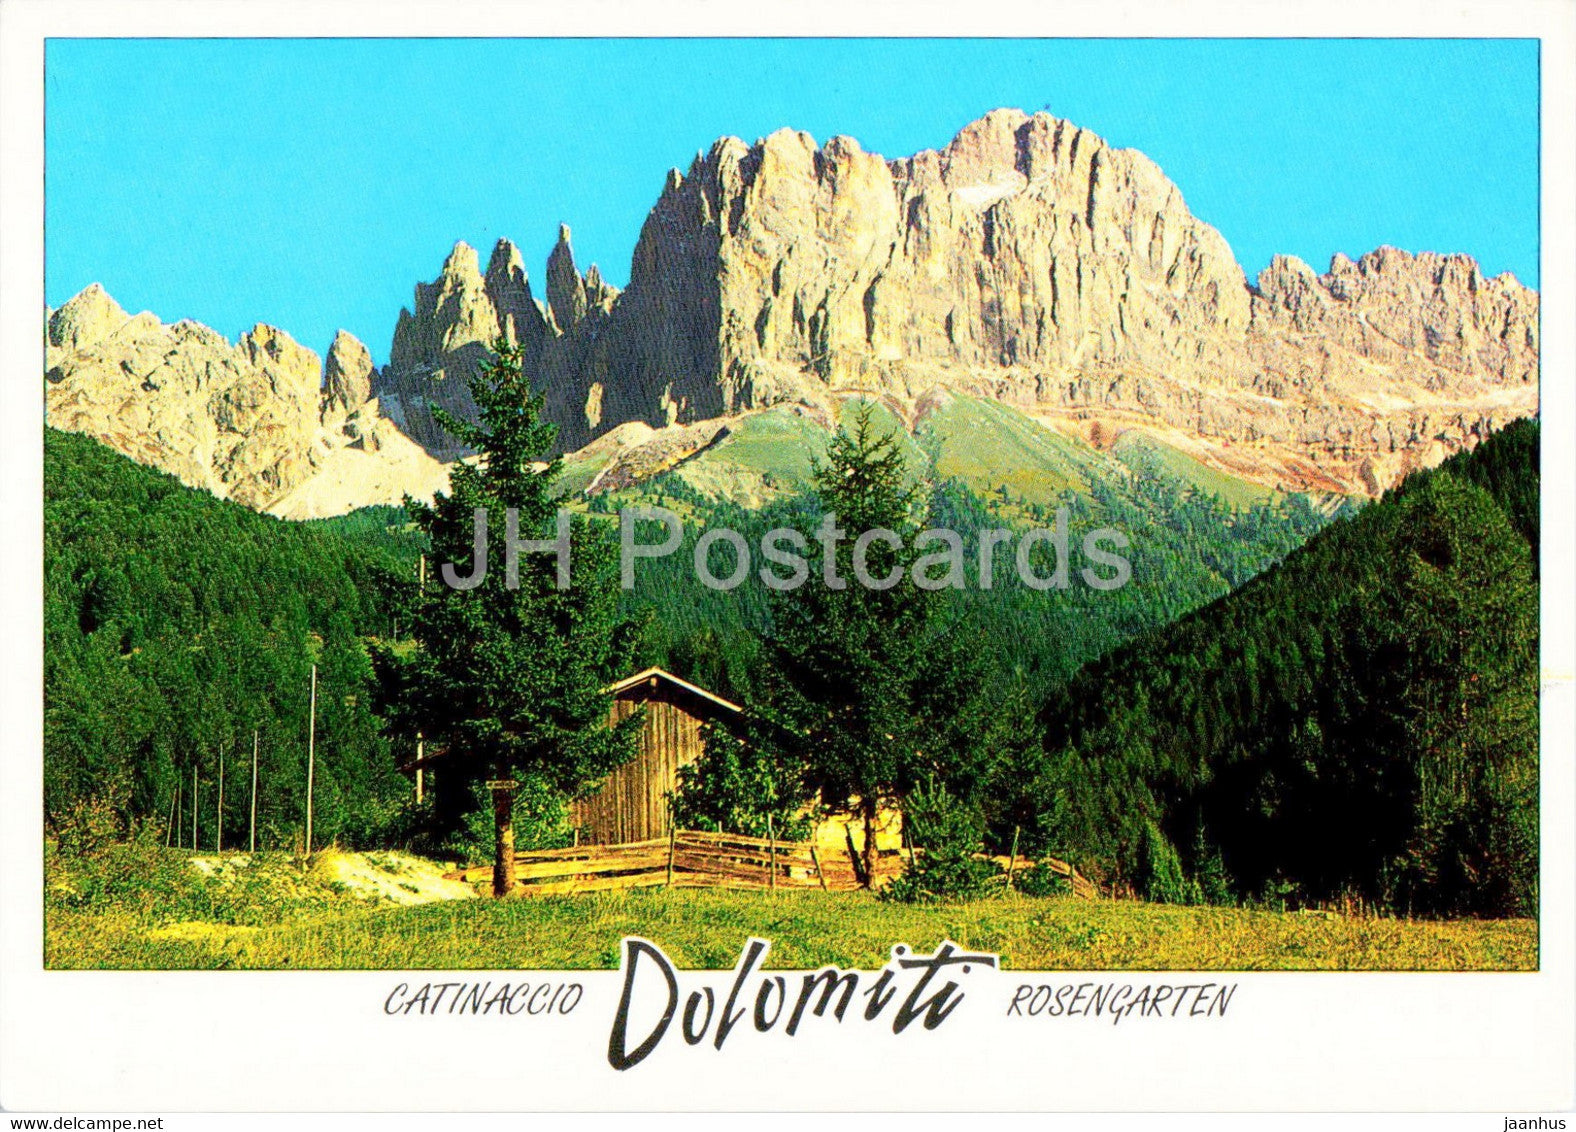 Il Gruppo del Catinaccio - Rosengartengruppe - 1998 - Italy - used - JH Postcards